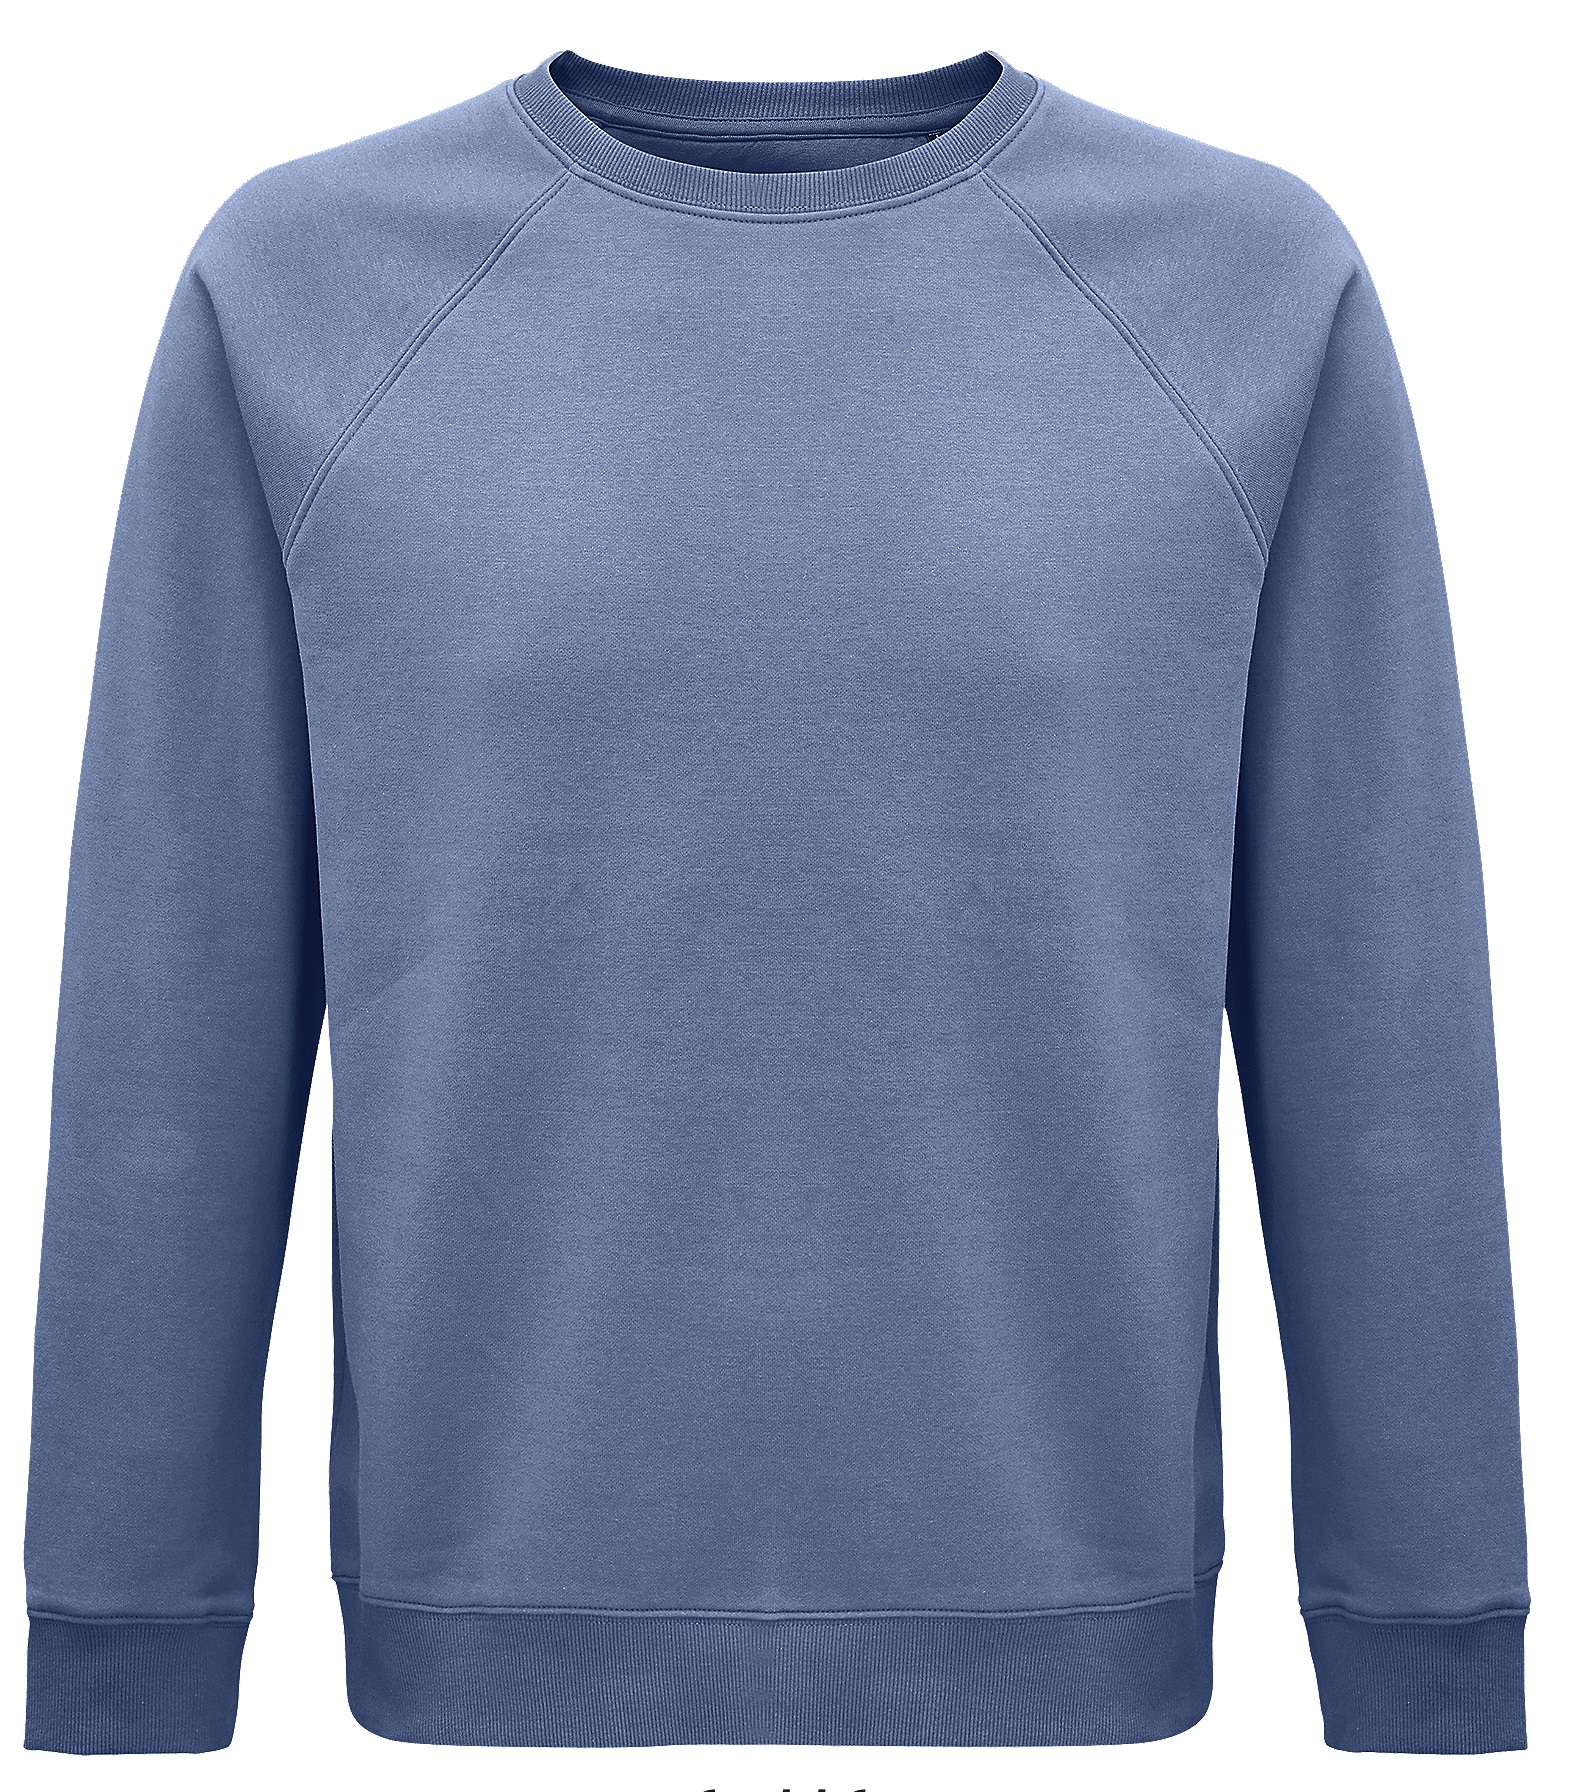 Unisex Space Sweatshirt L03567